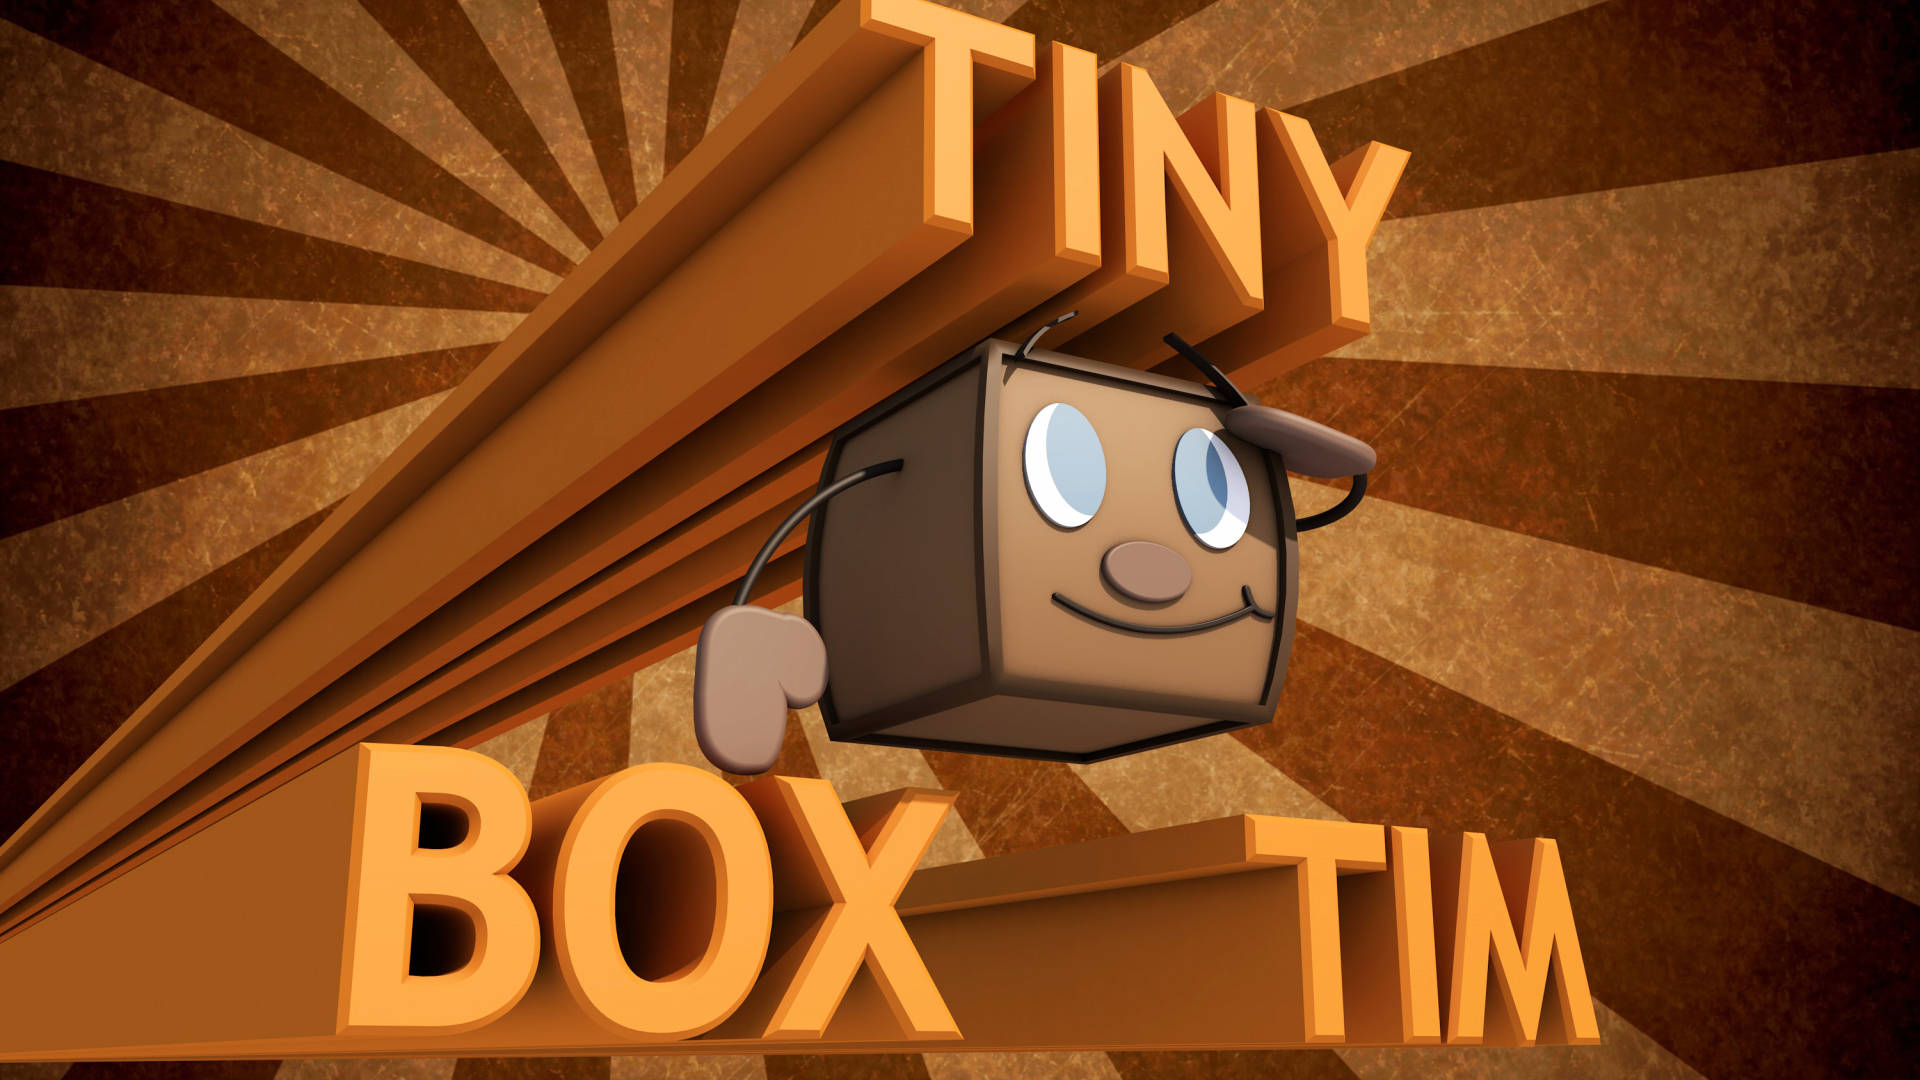 Markiplier Tiny Box Tim Background